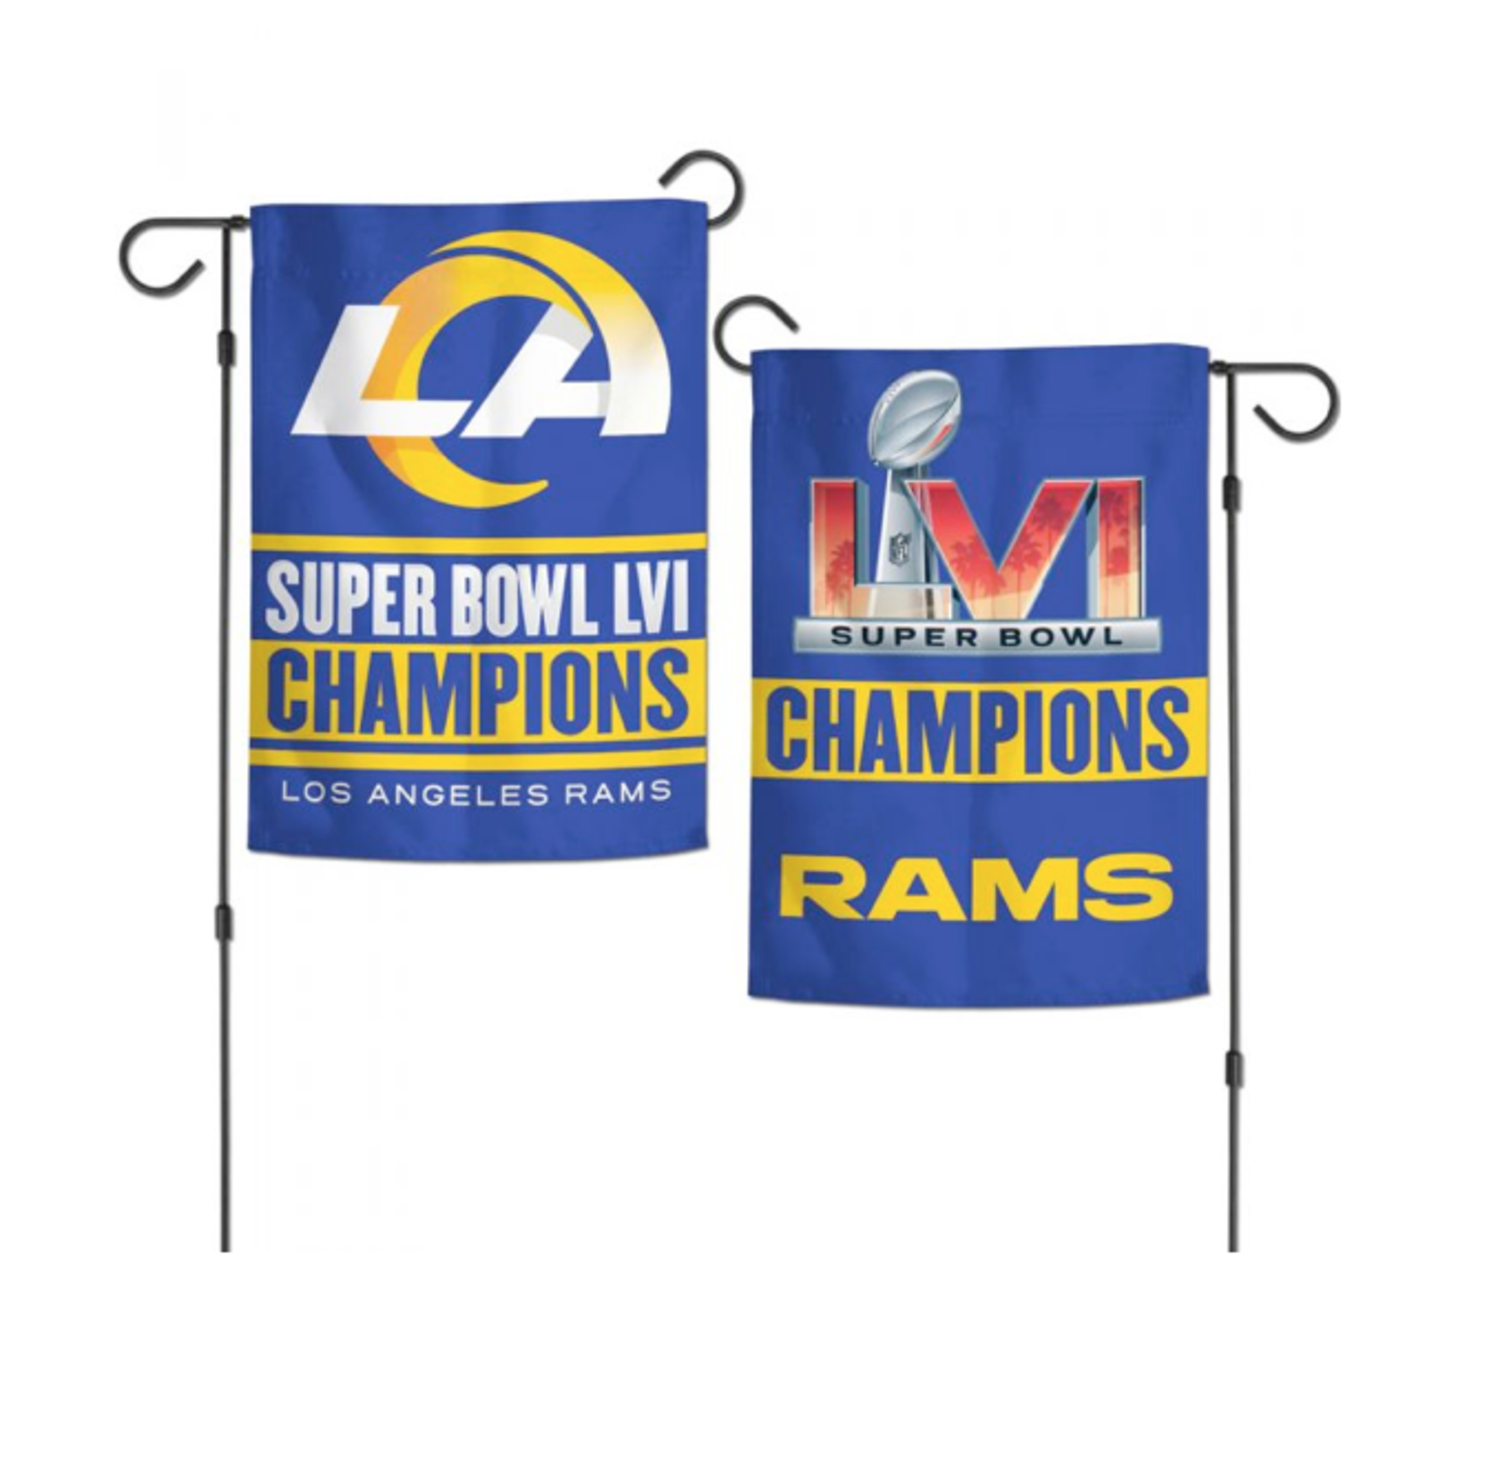 Los Angeles Rams NFL Super Bowl LVI Champions Straw Hat